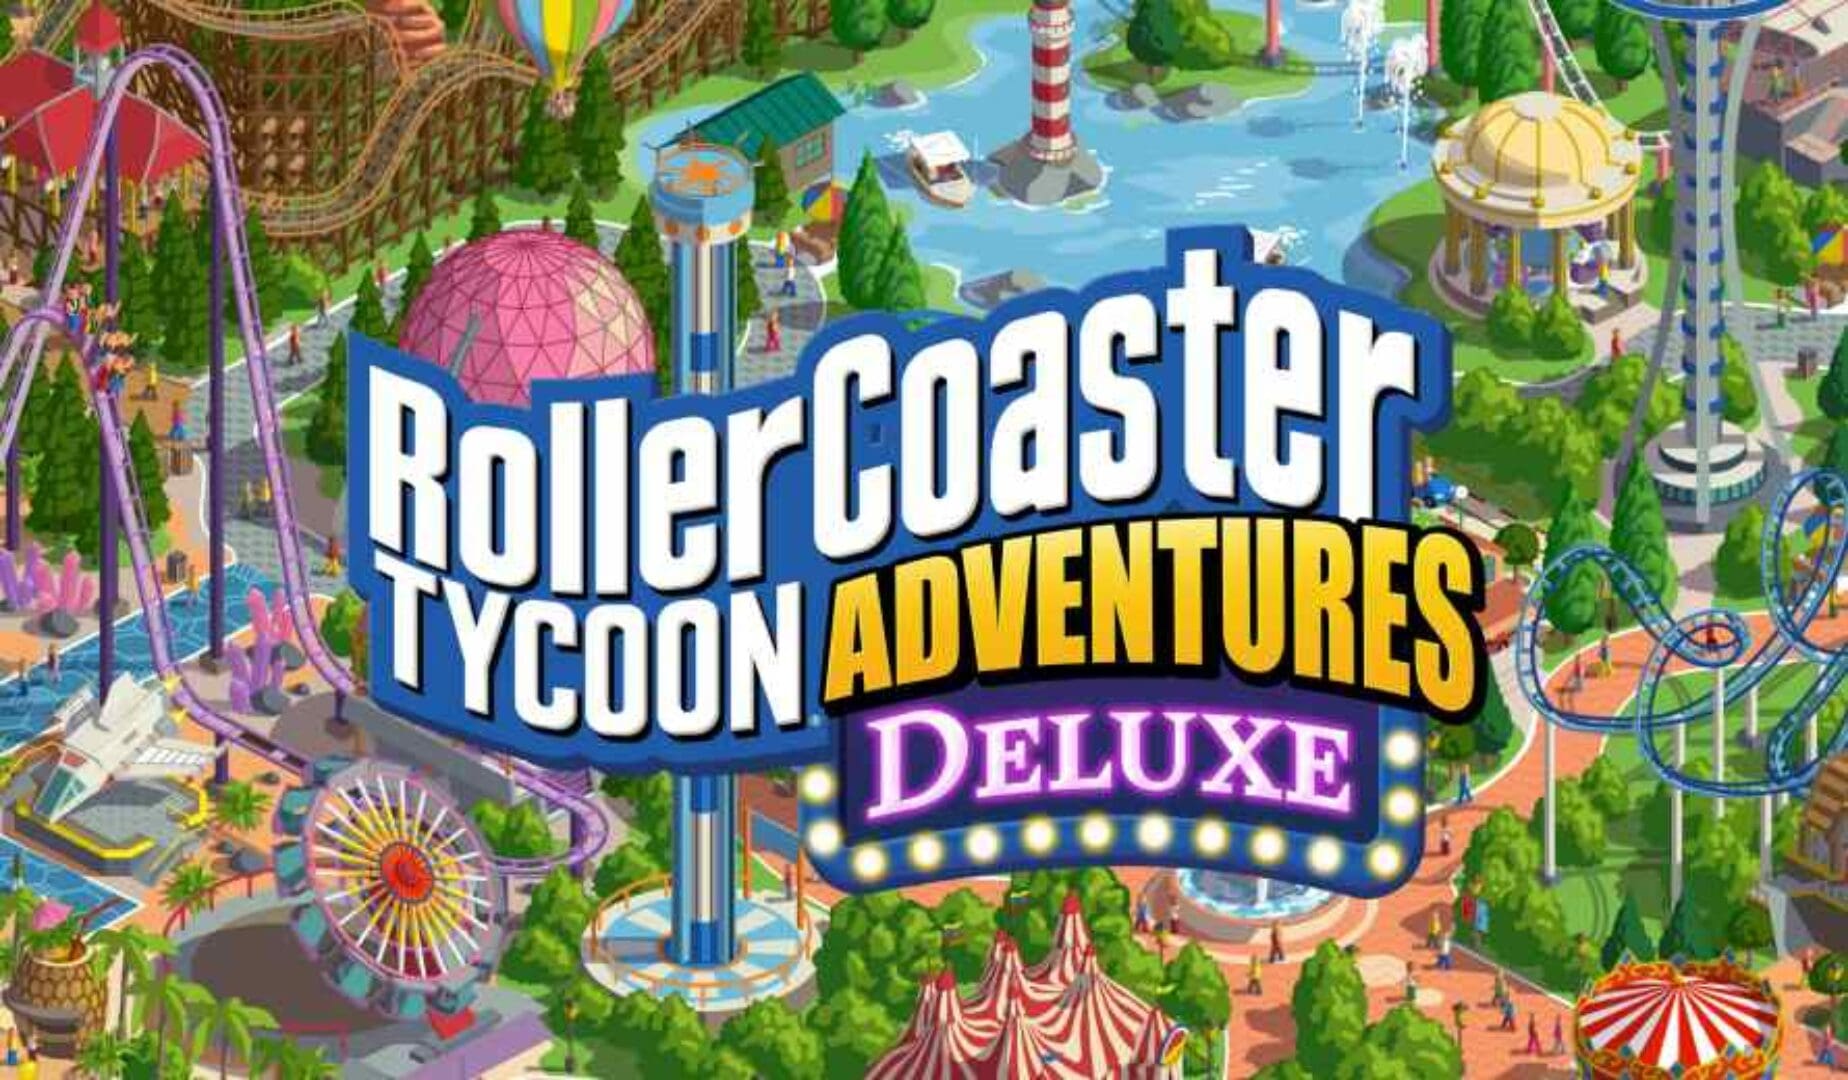 Roller Coaster Tycoon Classic - Three Monkeys Park 